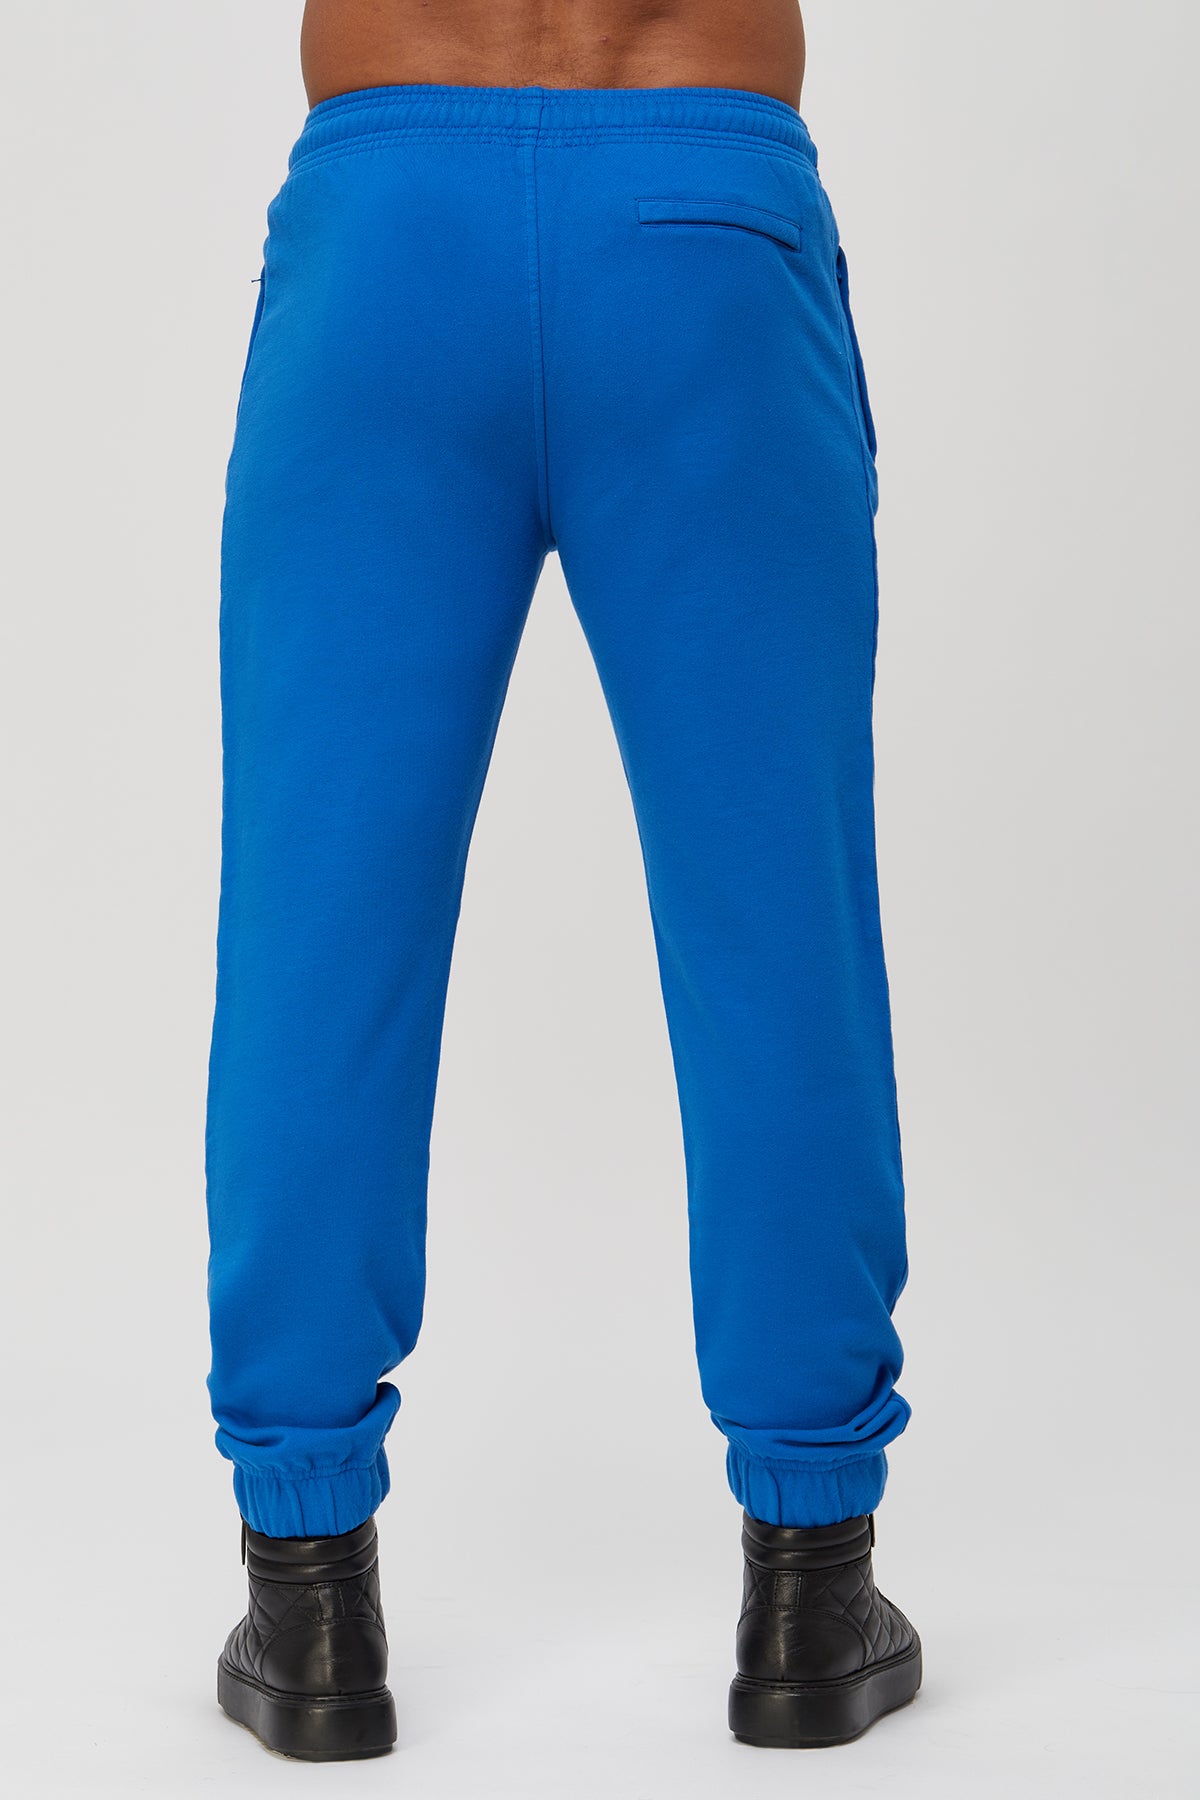 Men's sweatpants - active fleece joggers. 100 % great quality